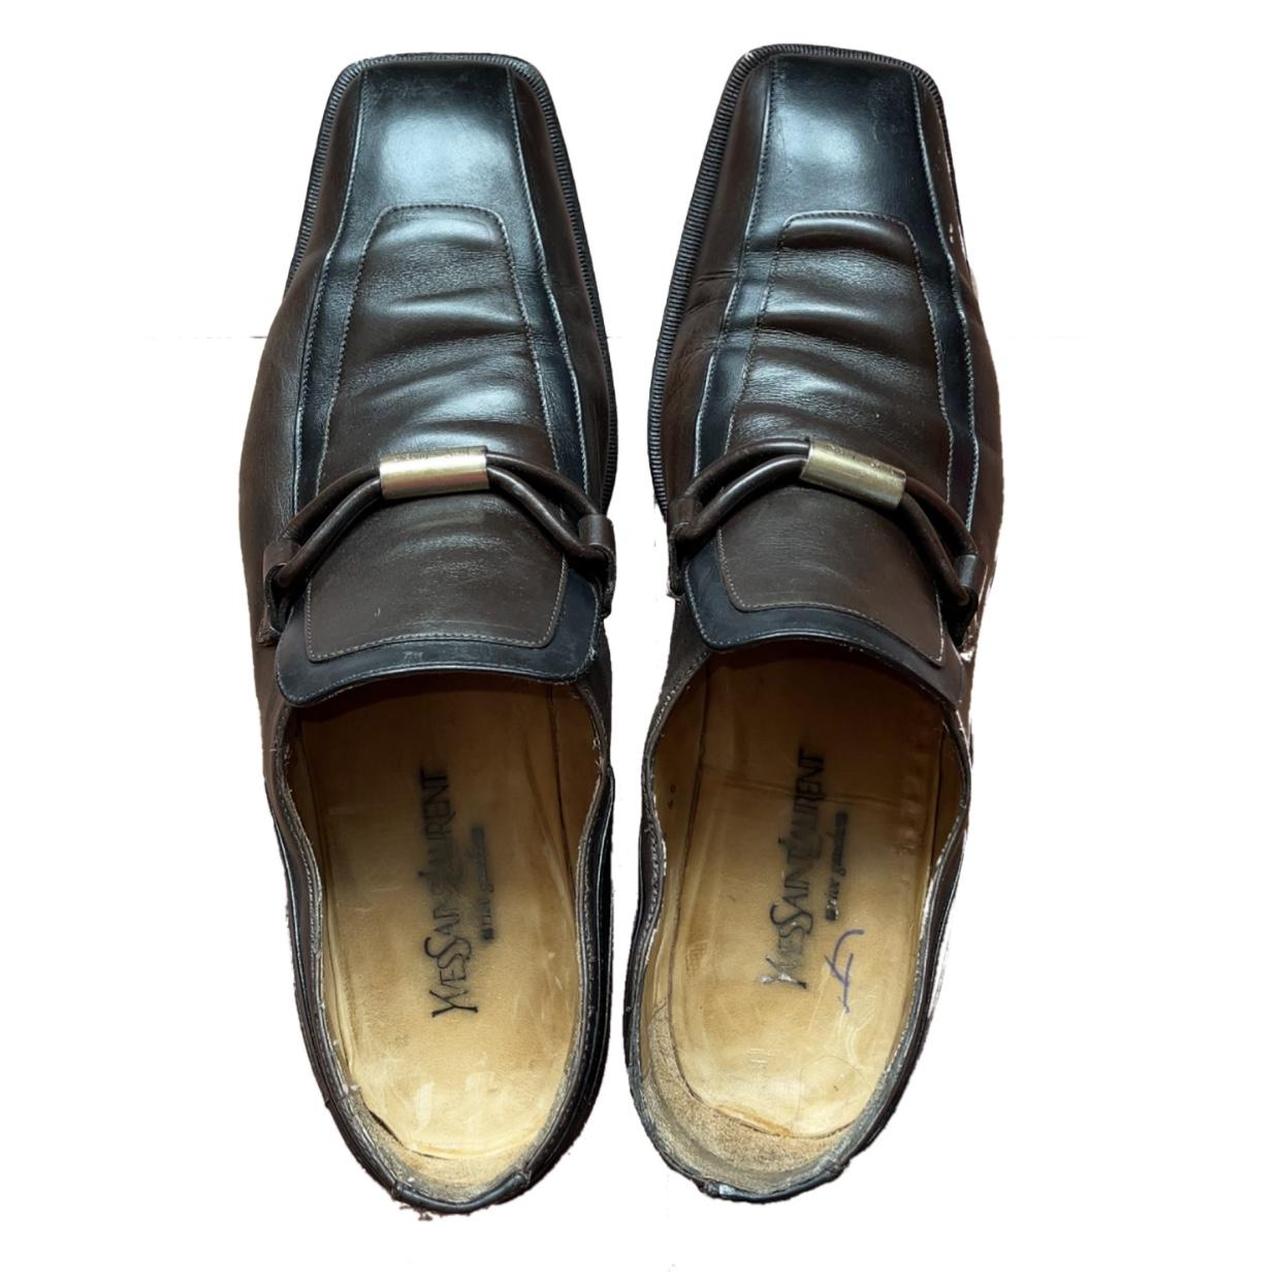 Yves Saint Laurent Men's Black and Brown Loafers | Depop